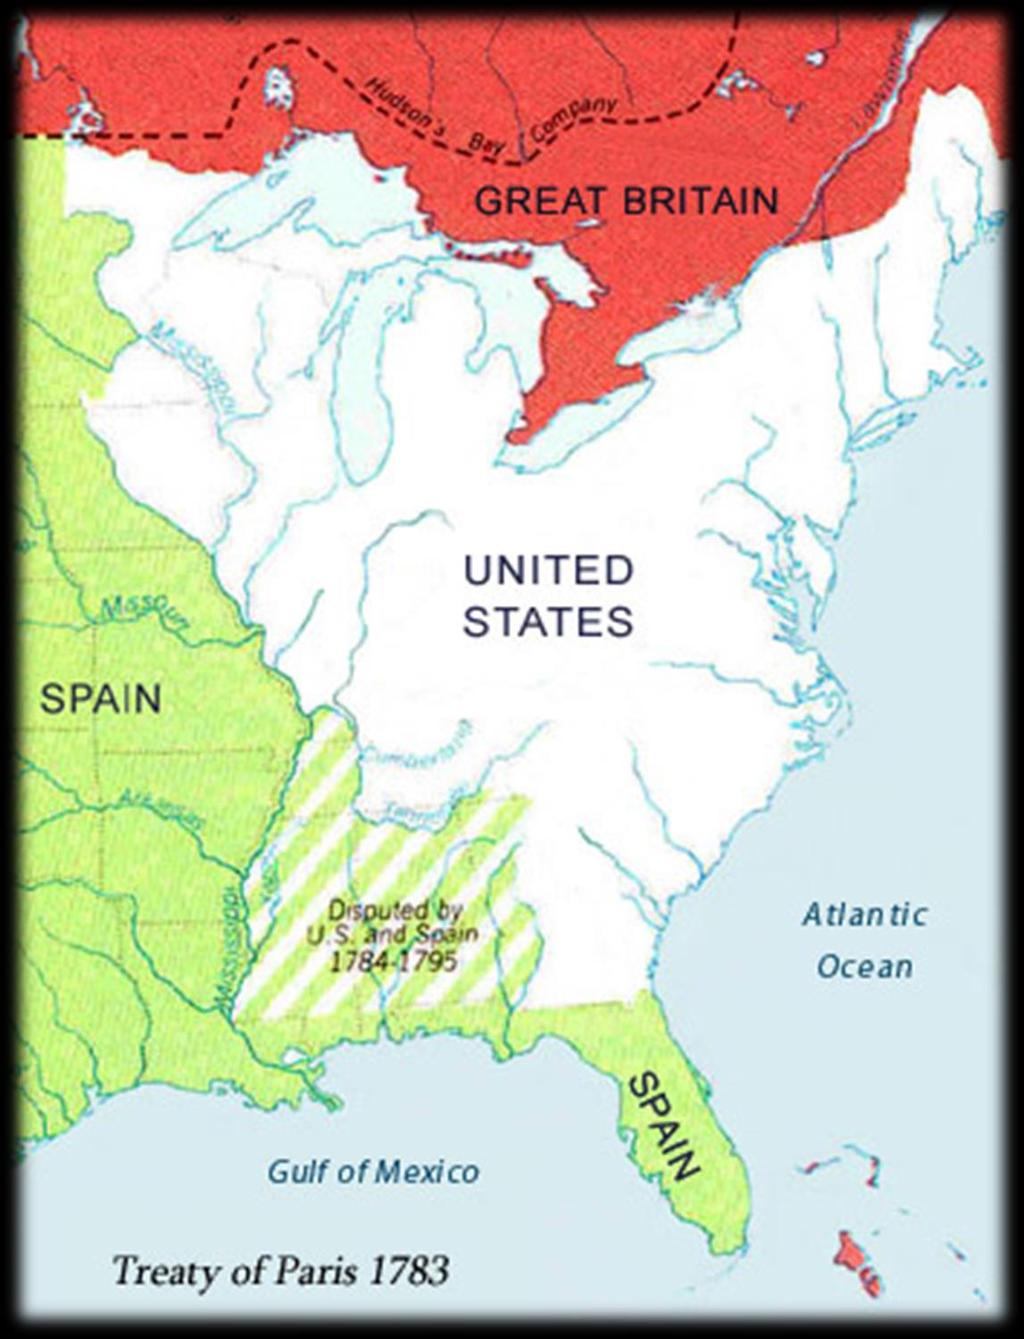 British and Fort Michilmackinac (U.S. soil) Fort Niagara (U.S. soil) Detroit (U.